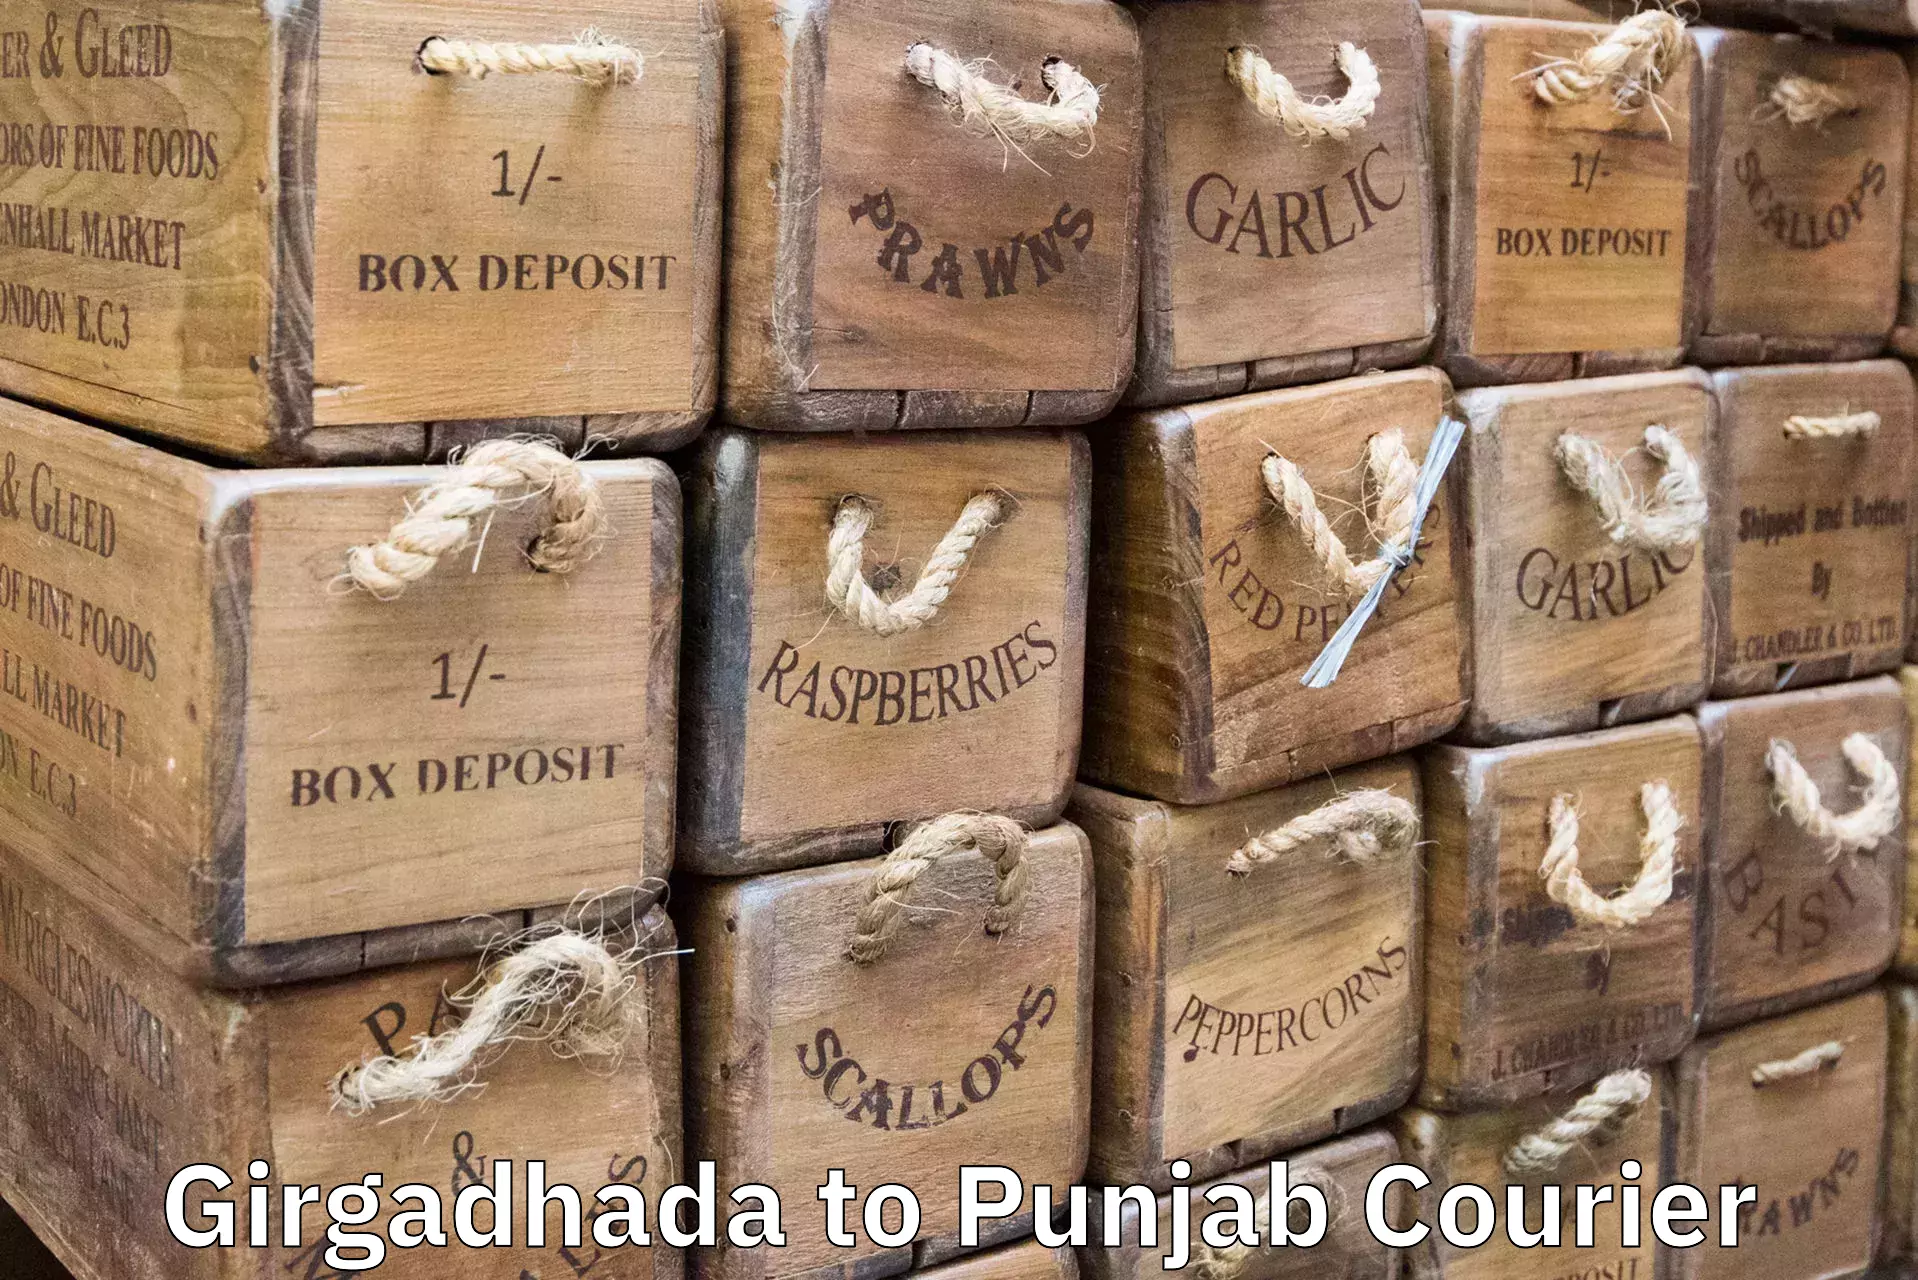 Baggage shipping quotes Girgadhada to Nawanshahr